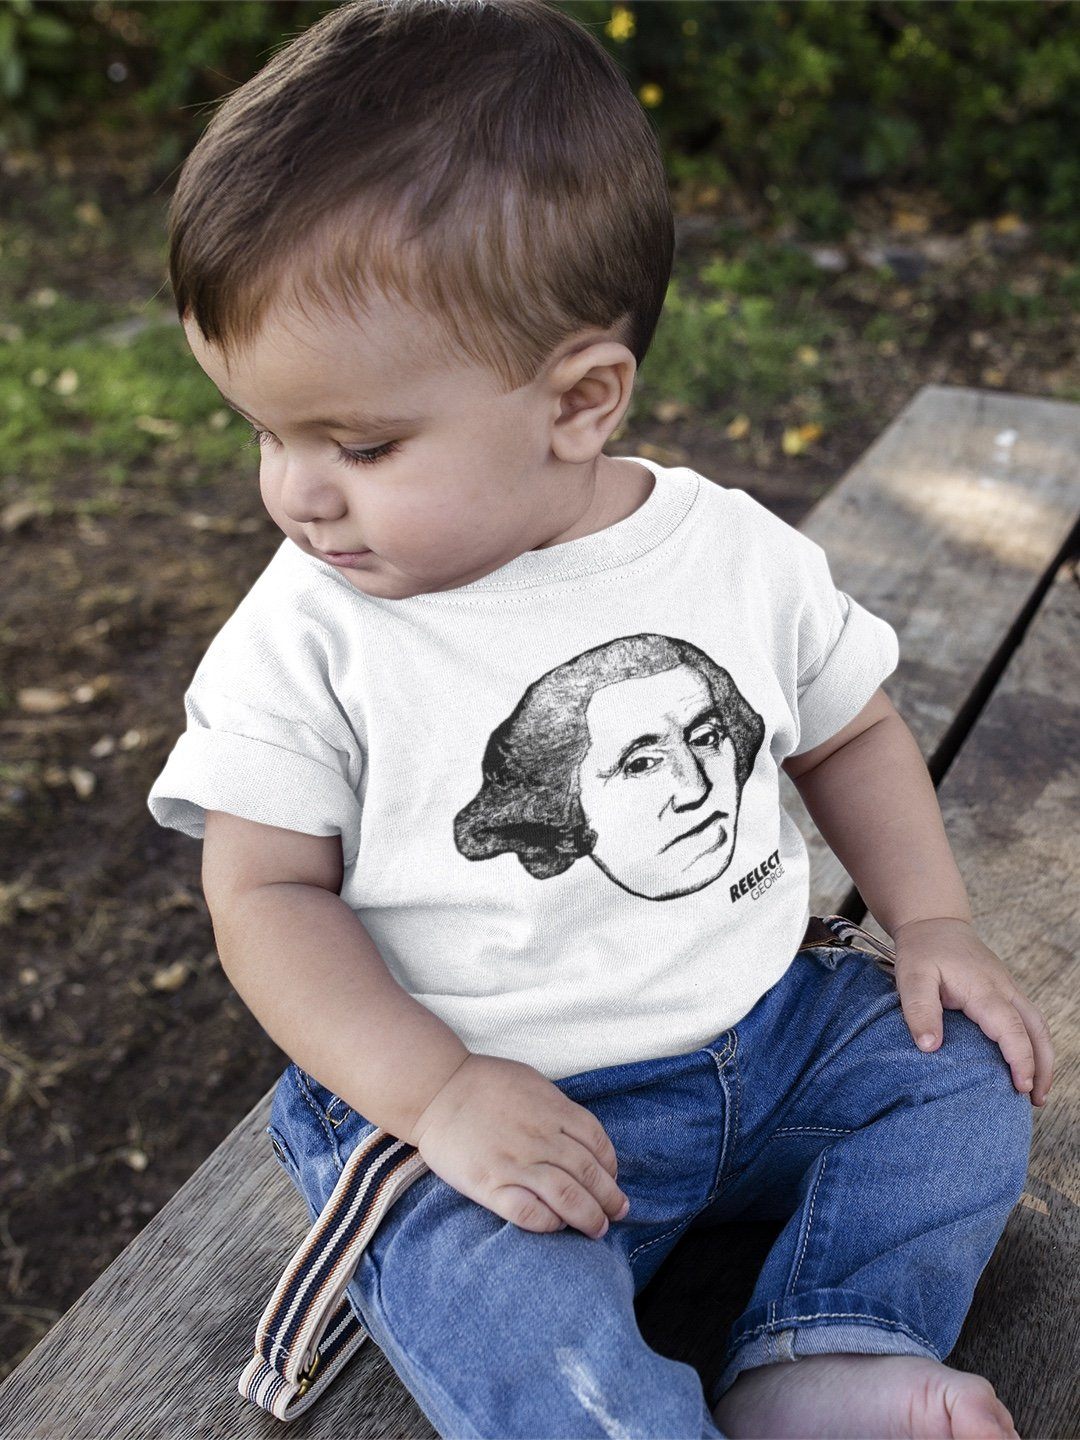 The Original Revolutionary Baby Tee Baby Shirt Reelect George 